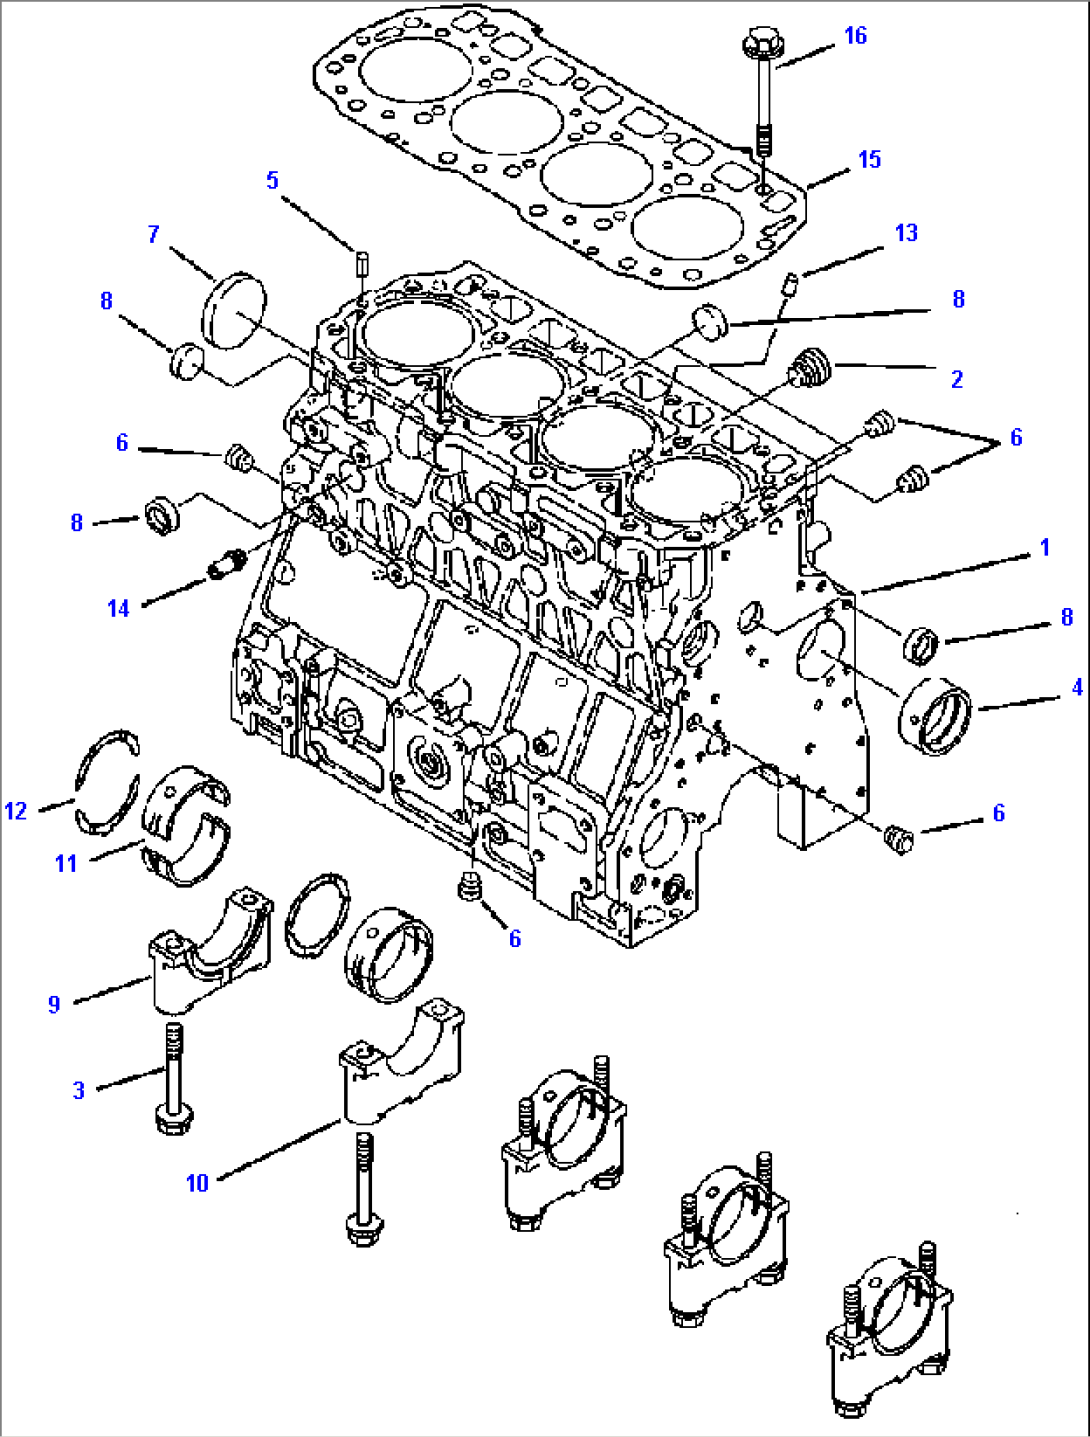 FIG. A0110-01A1 TIER II ENGINE - CYLINDER BLOCK